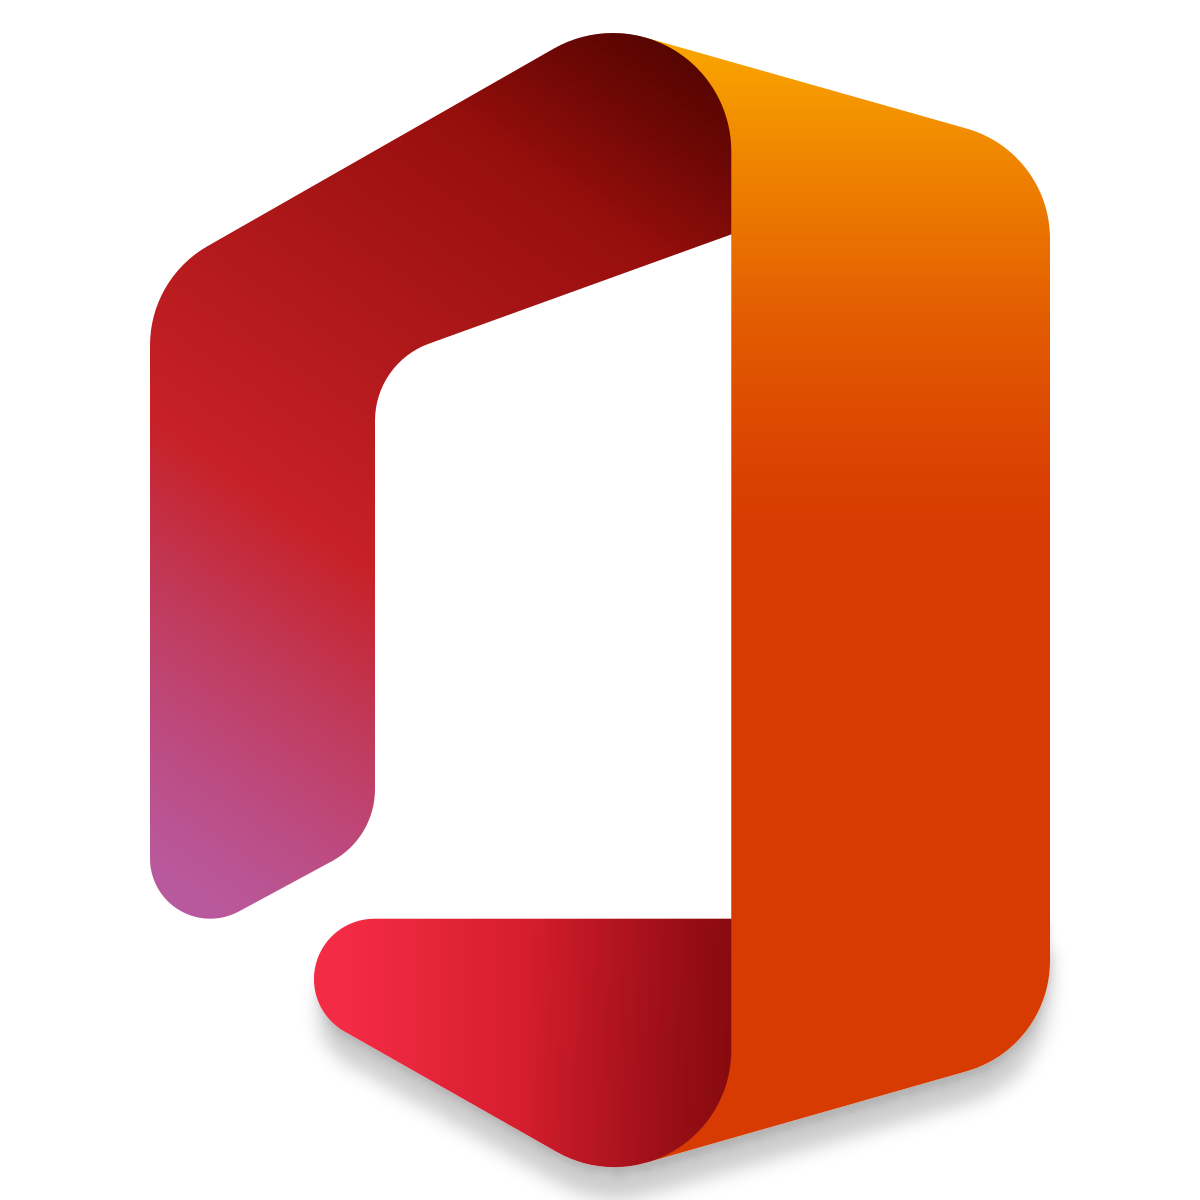 Nuovo logo Microsoft Office app per Windows 10 Android e iOS